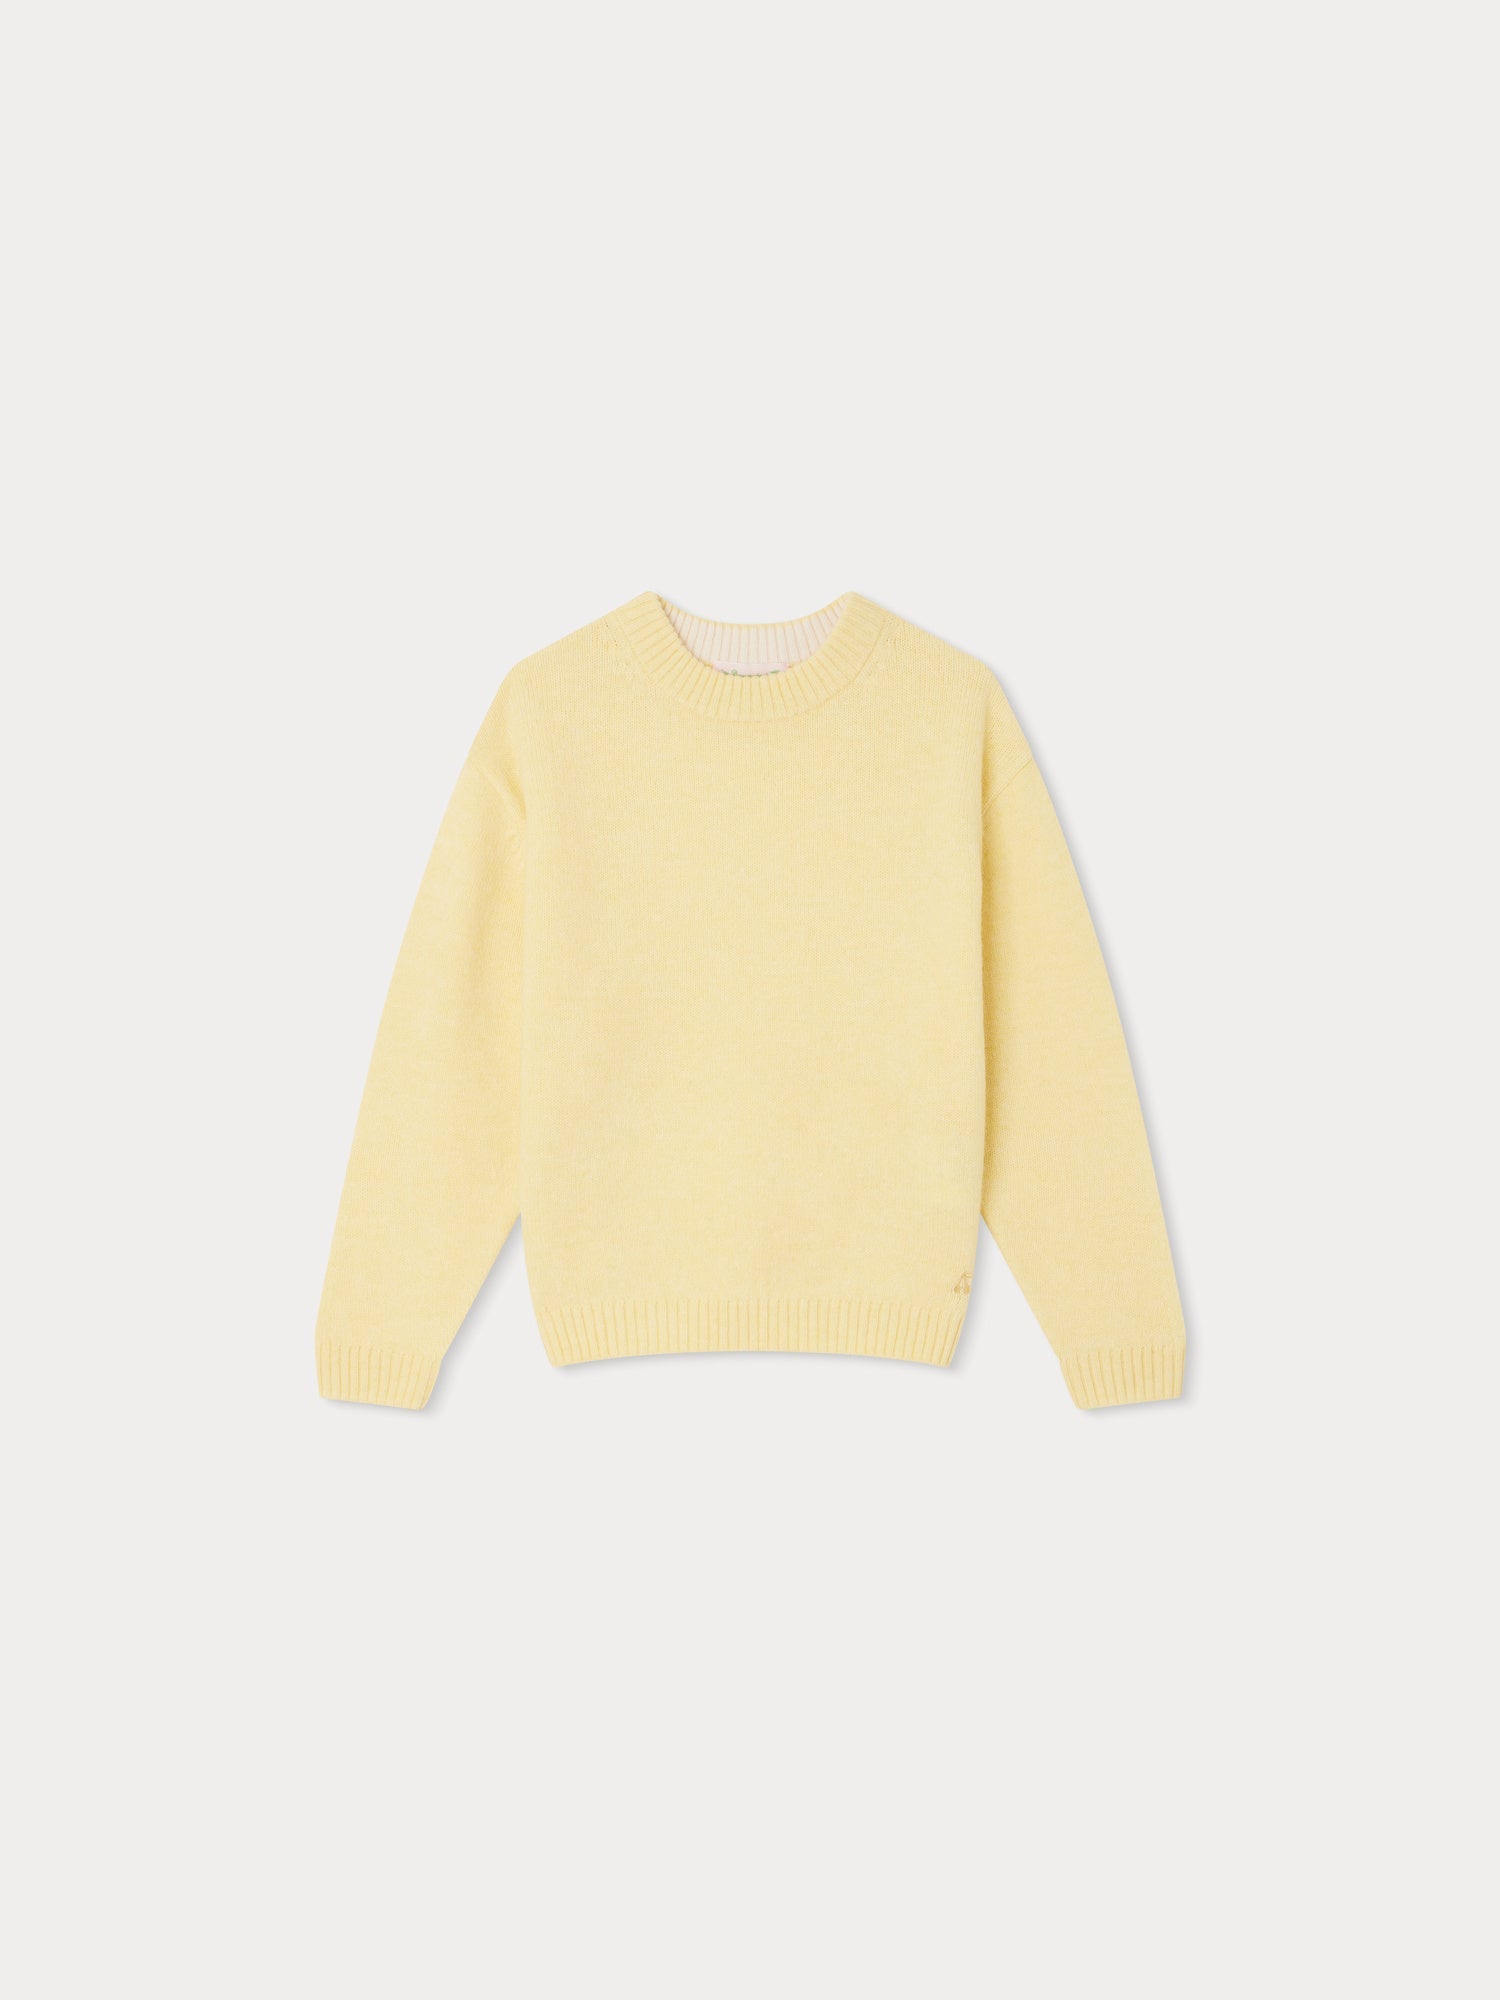 Girls Yellow Wool Sweater